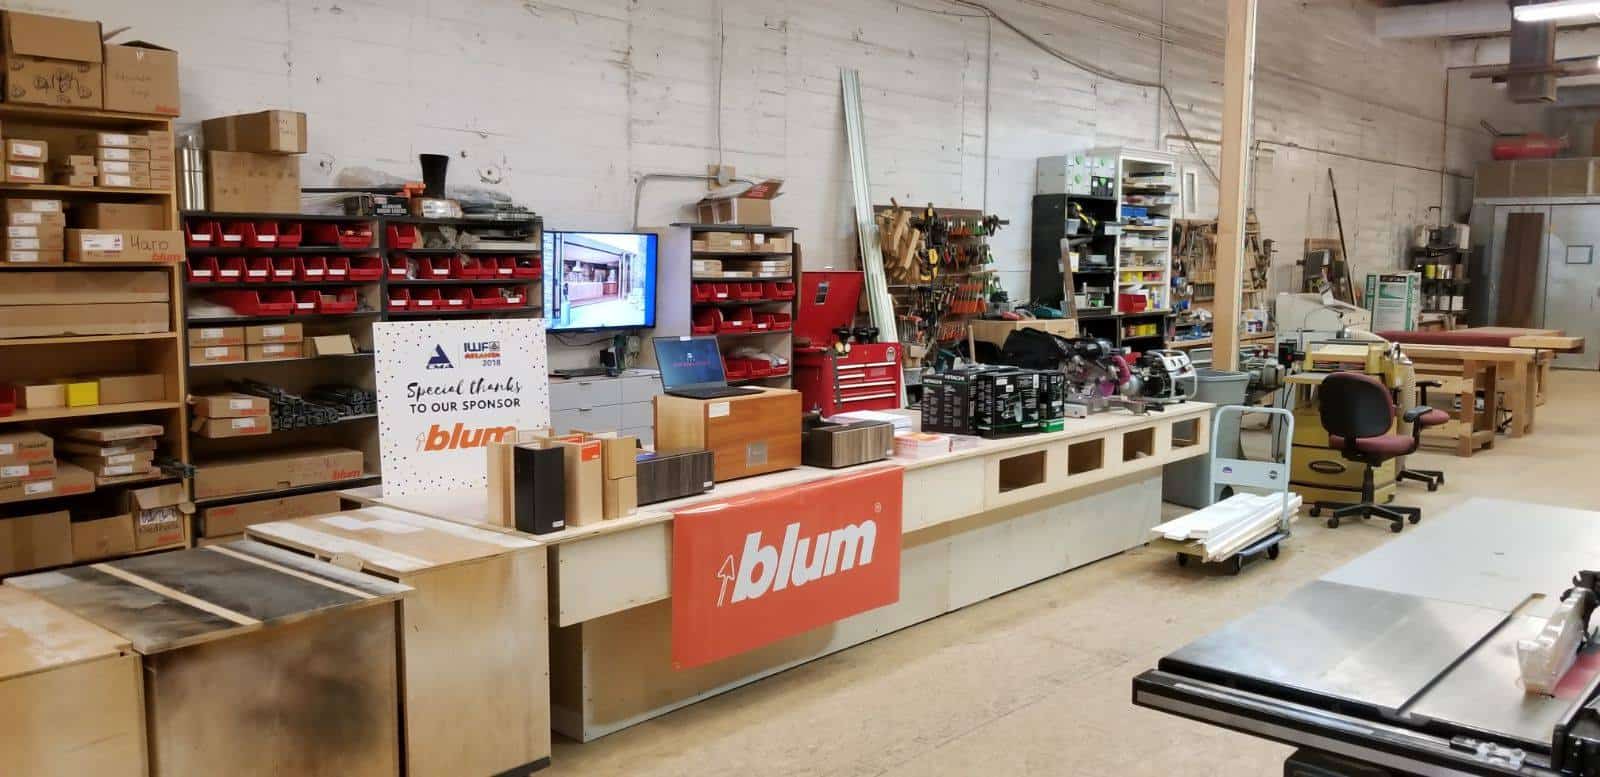 Image of Blum sponsorship area.